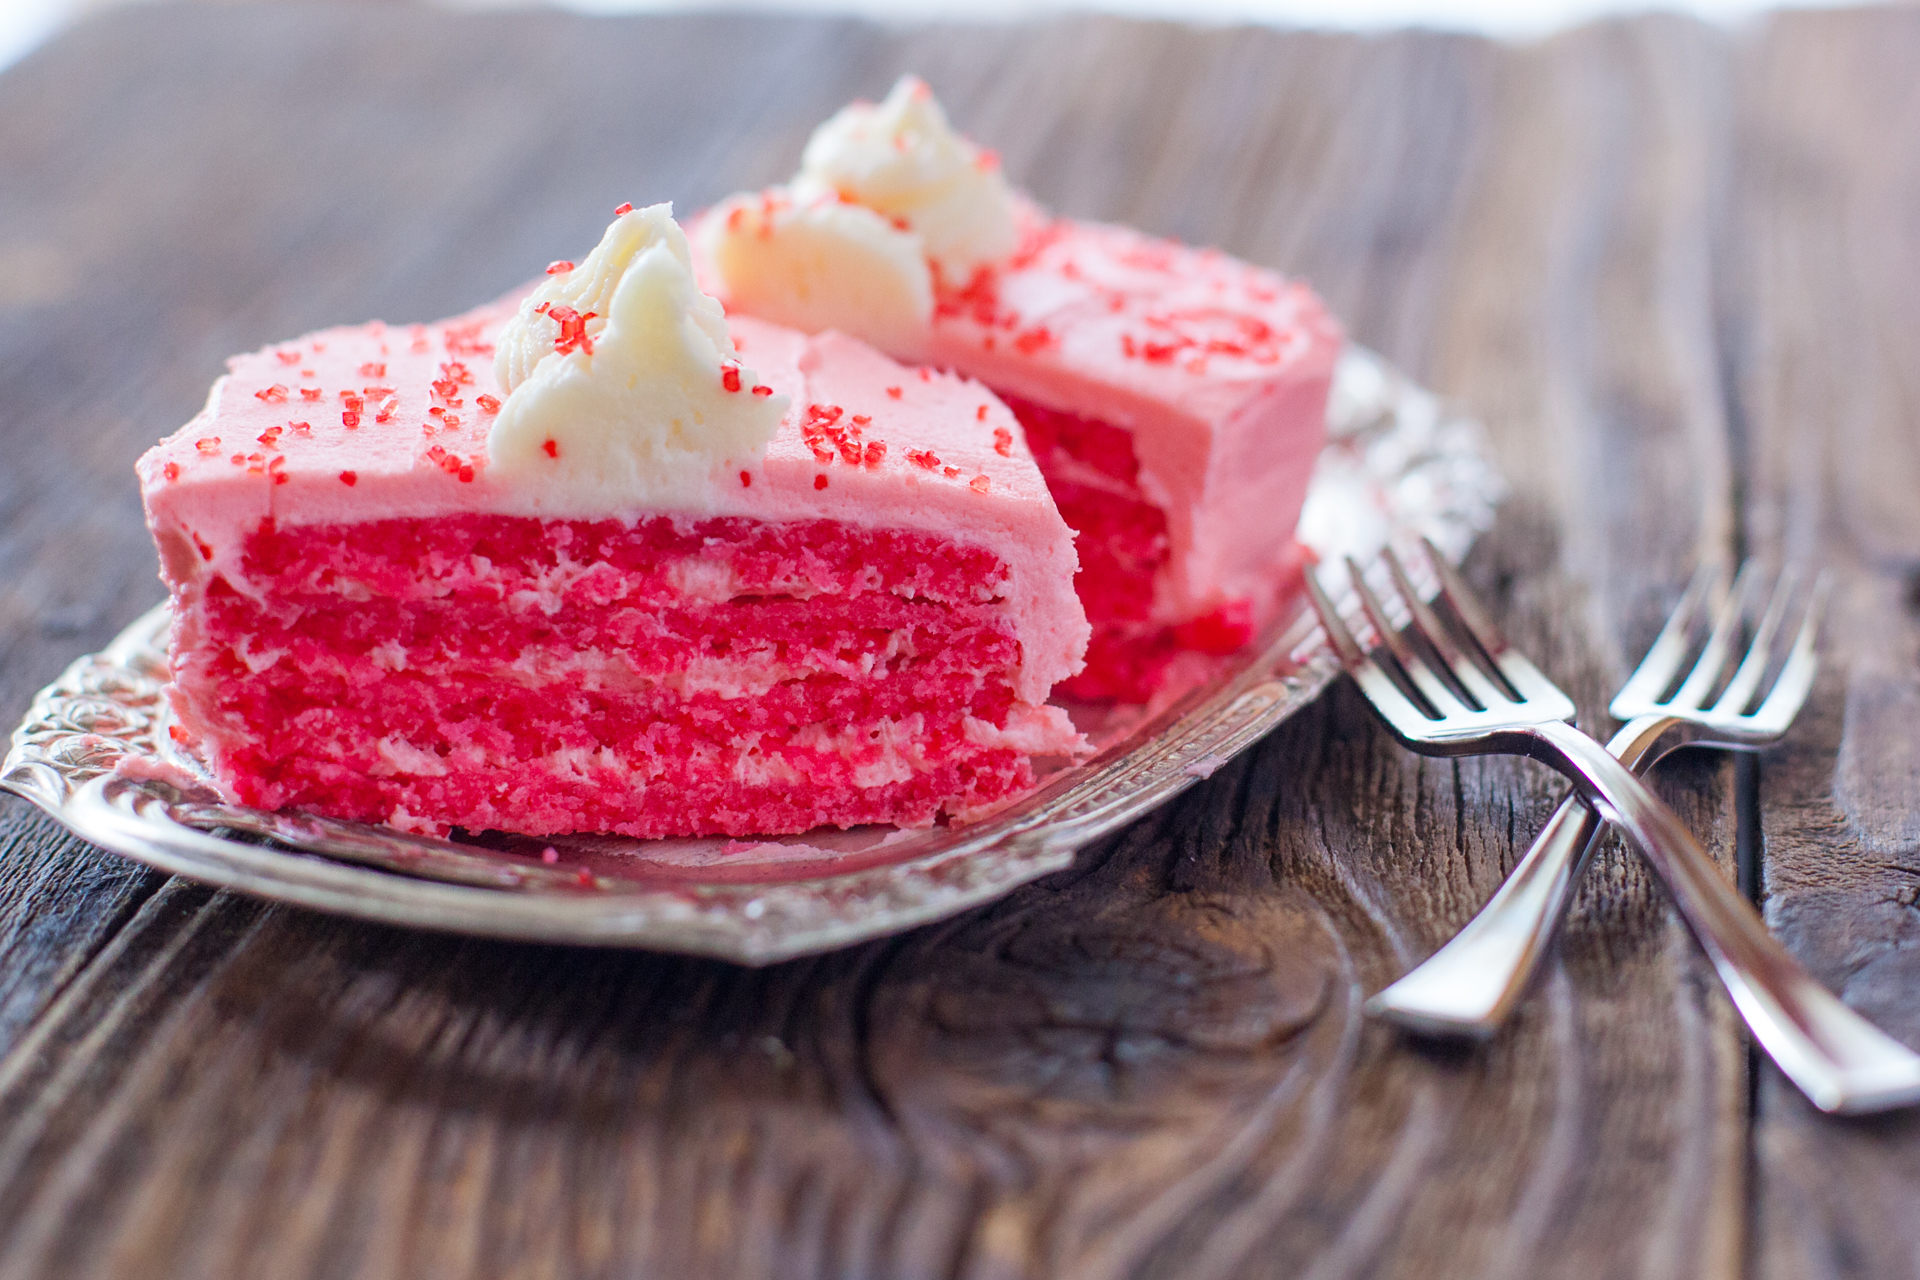 pretty pink cake